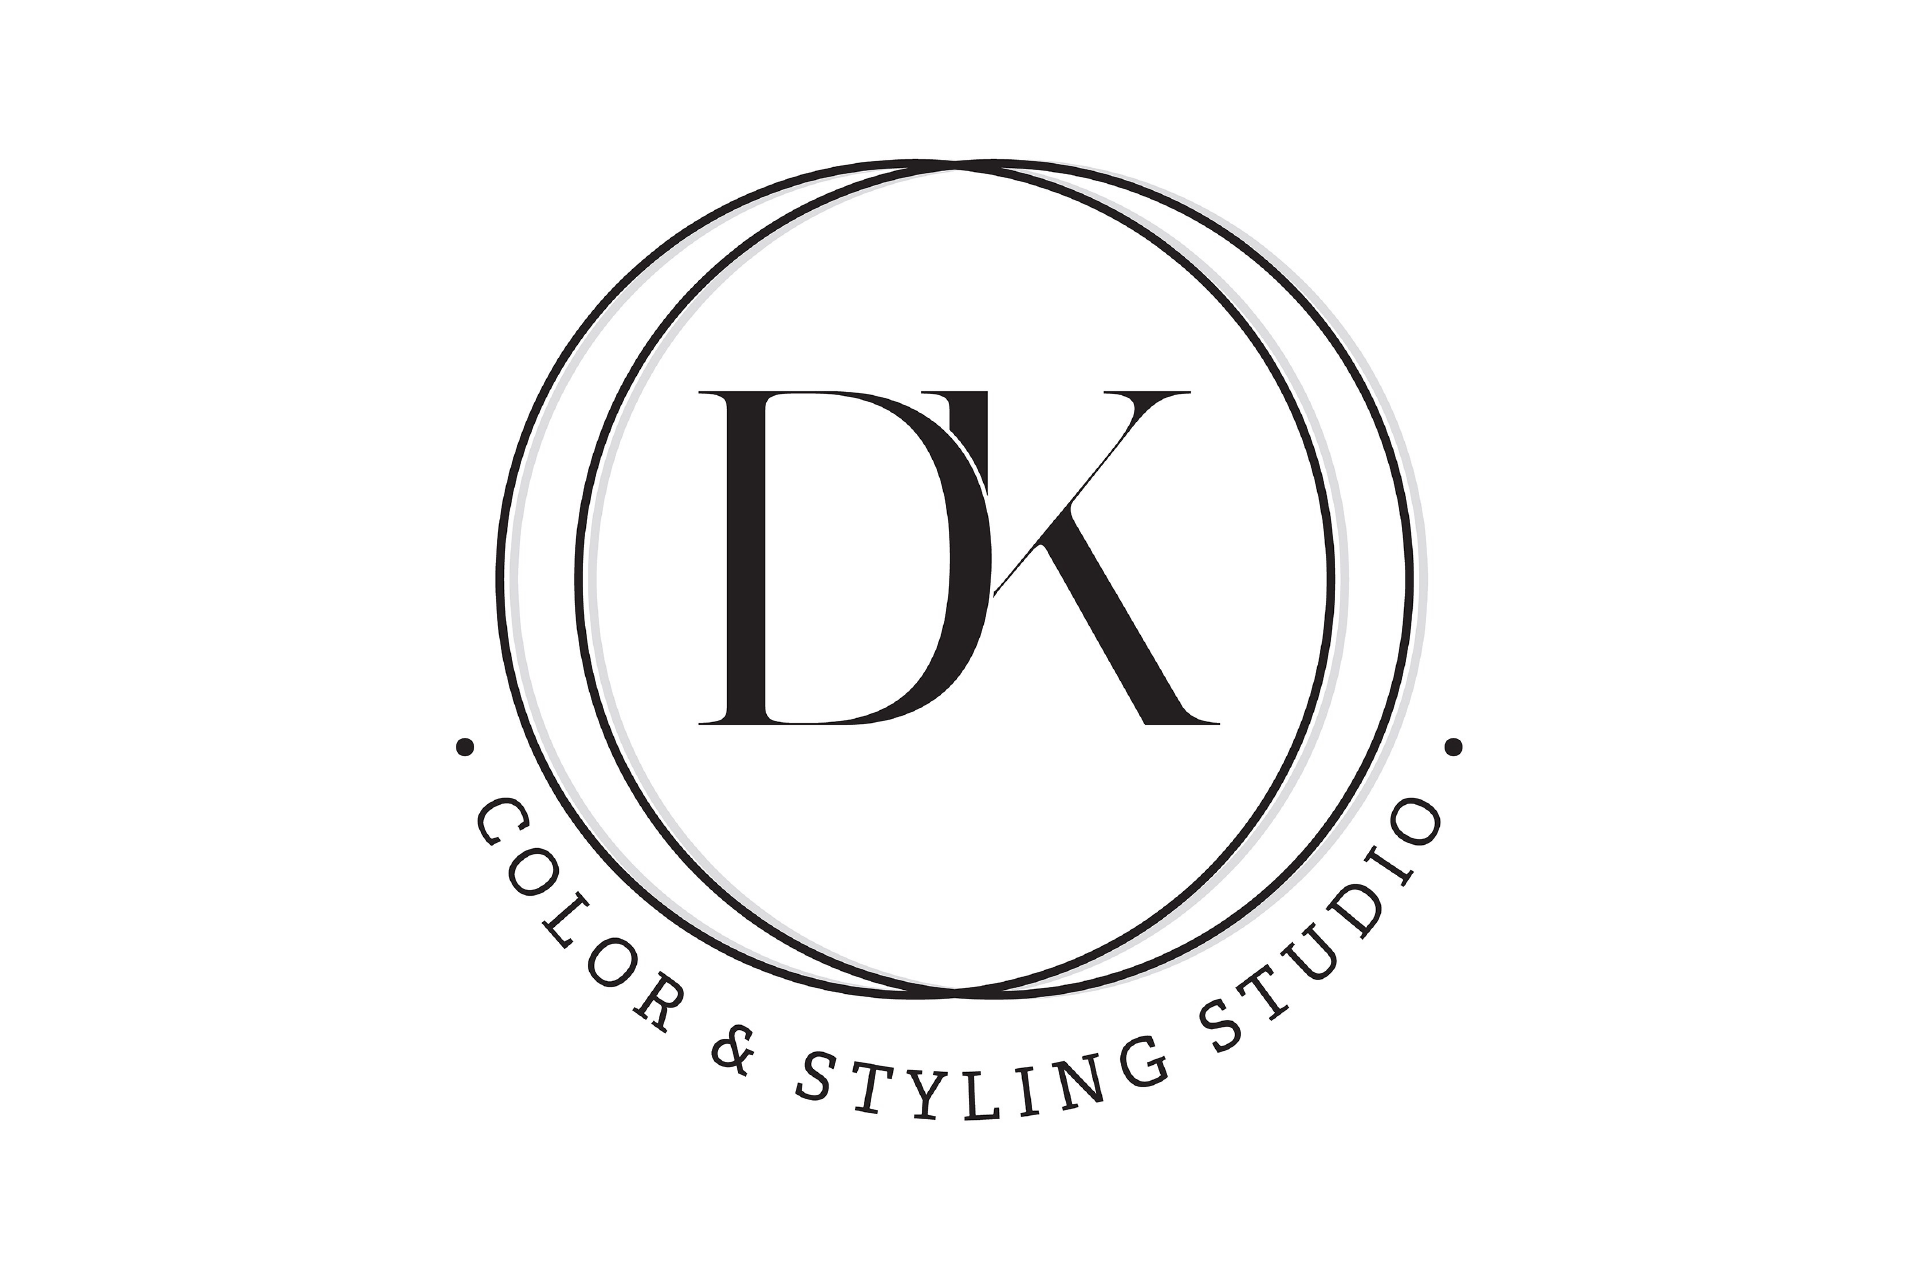 DK Photography Logo Design by Gary Godby at Coroflot.com